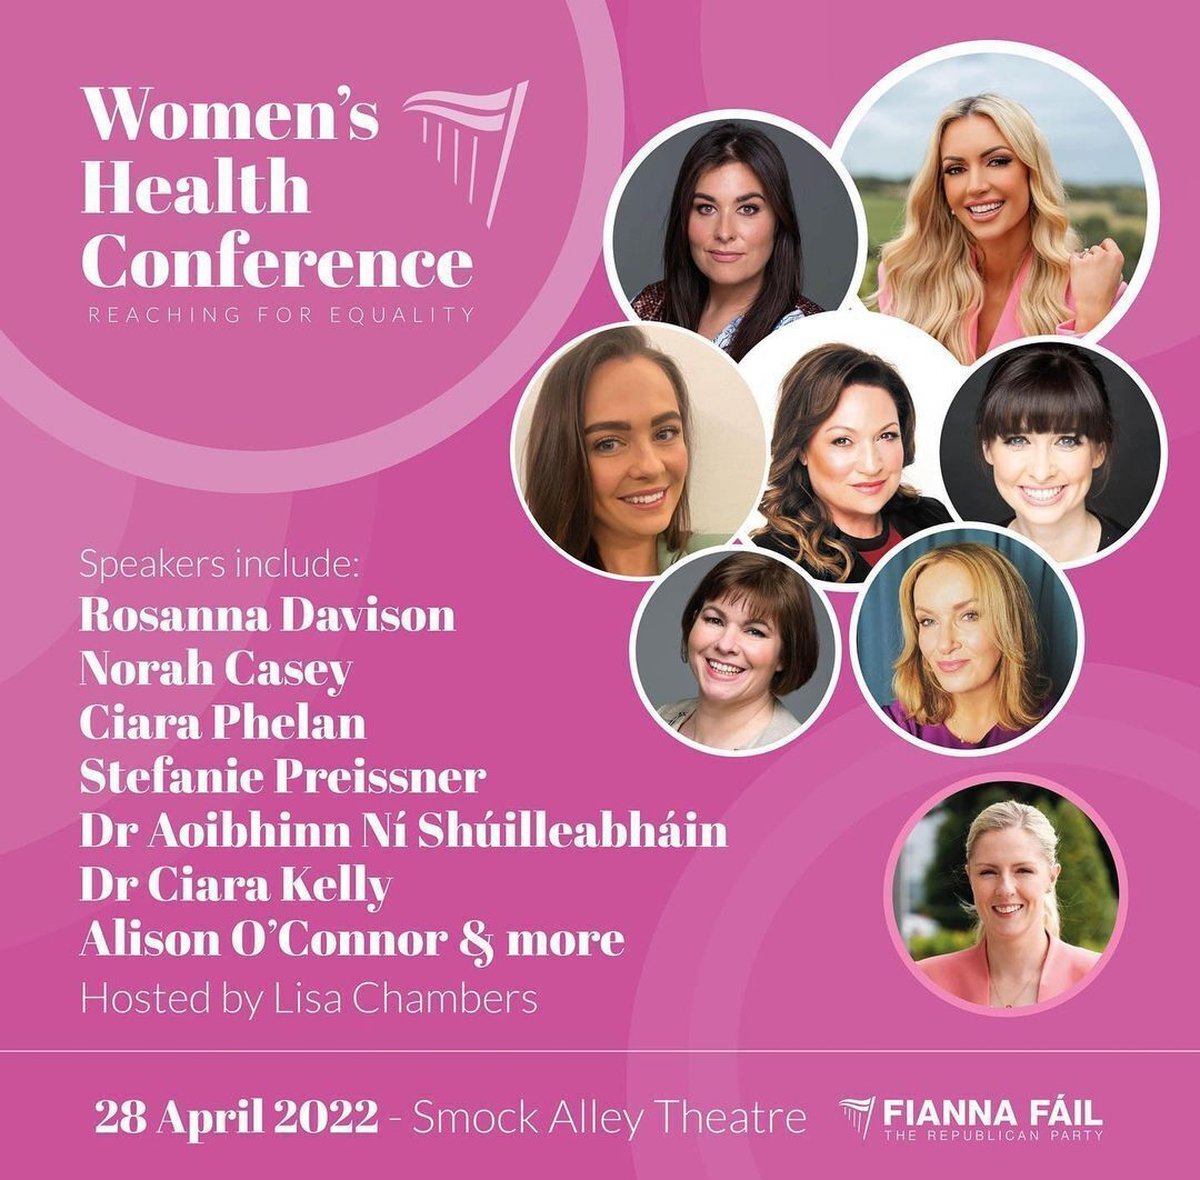 Women's Health Conference Liveline RTÉ Radio 1